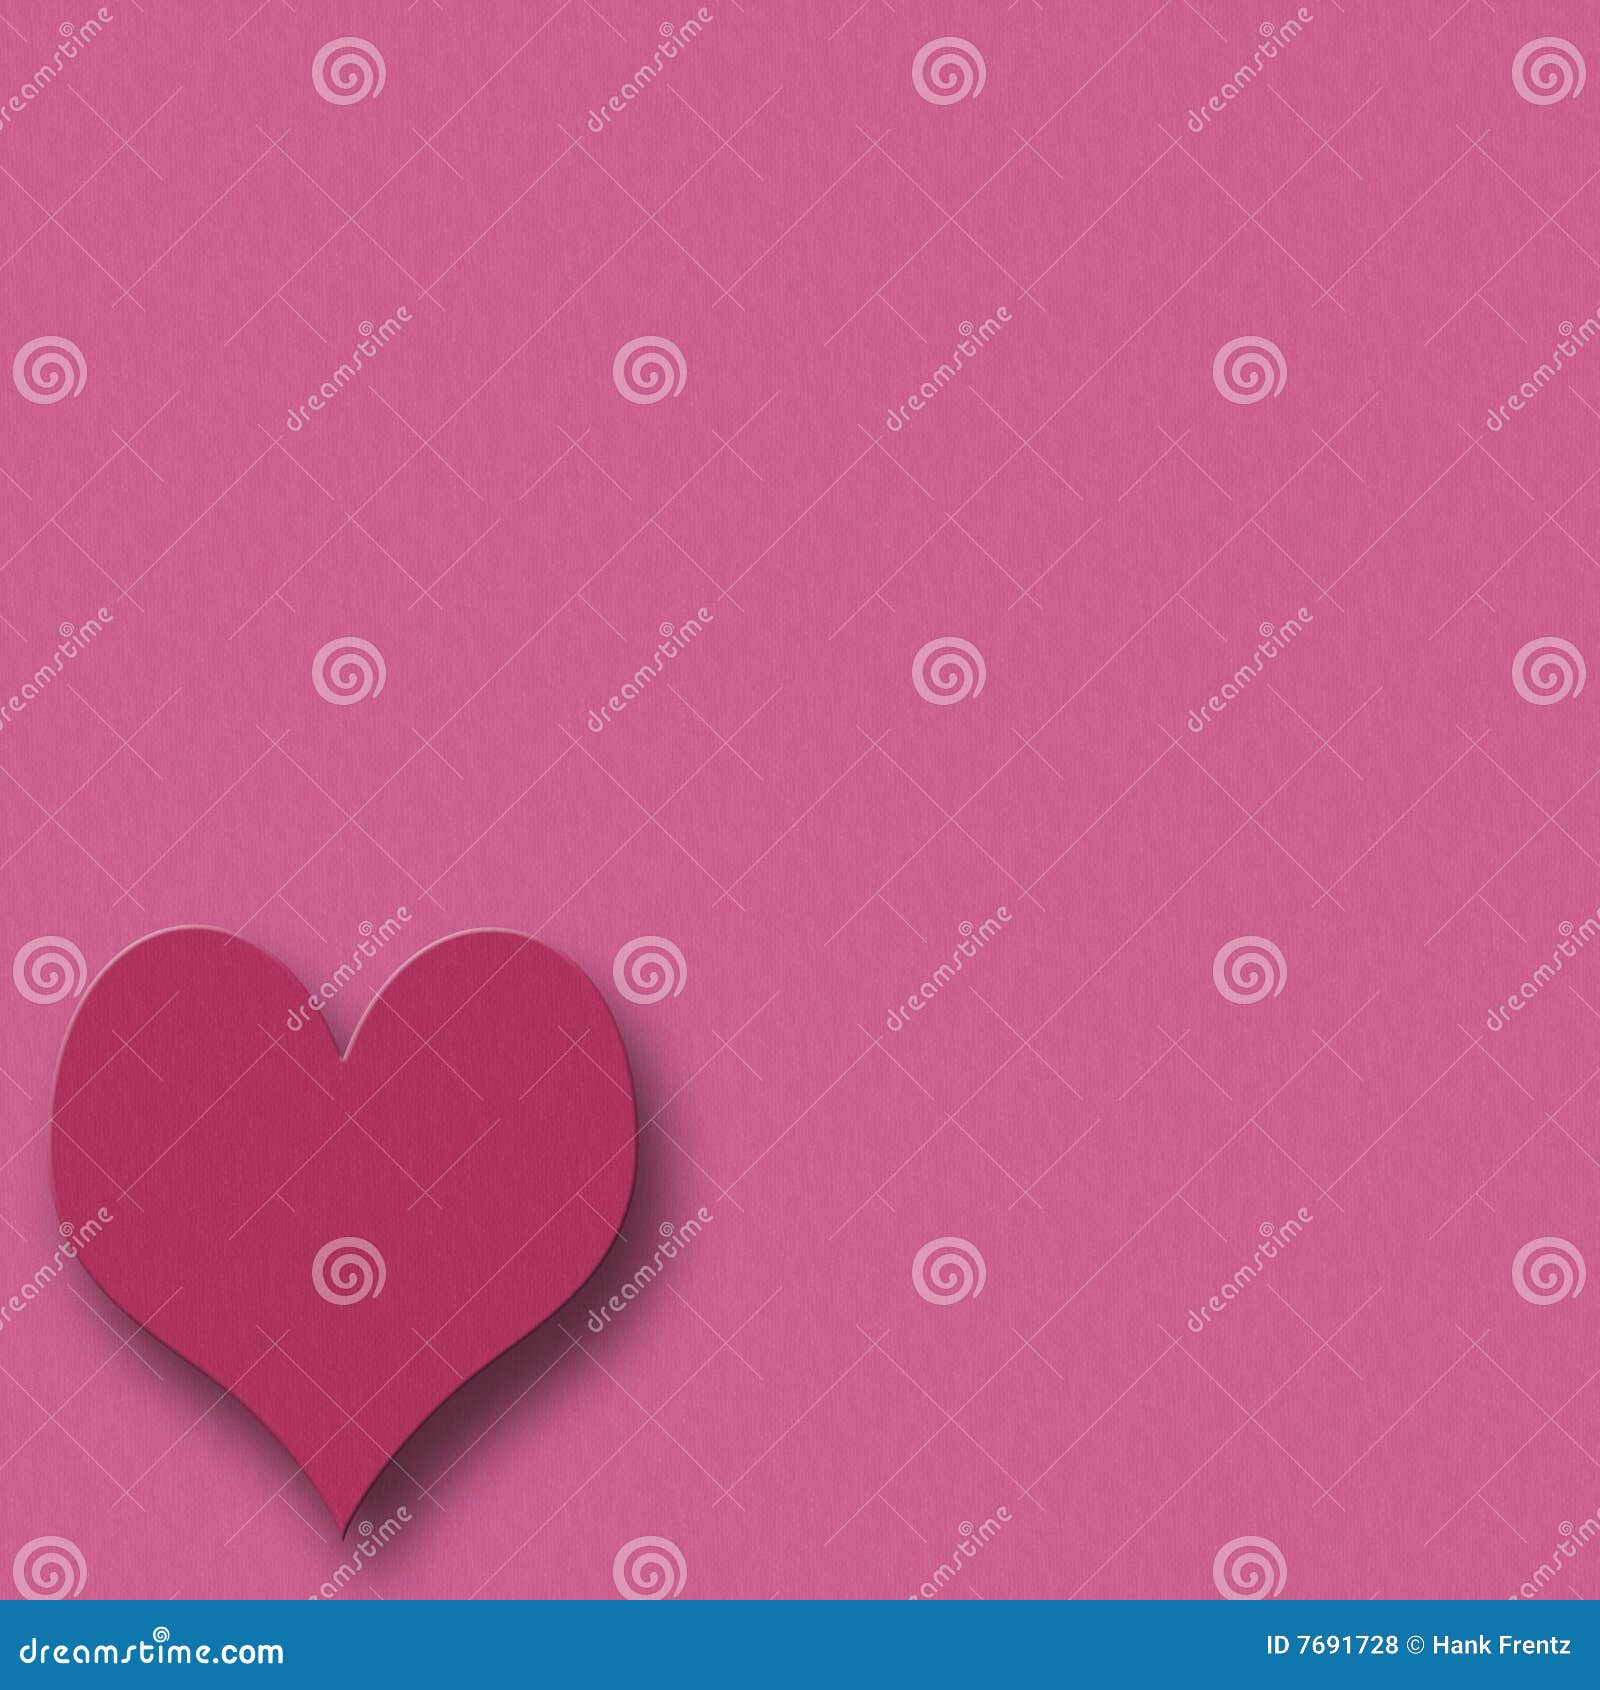 Pink Heart on Pink Background Stock Illustration - Illustration of ...